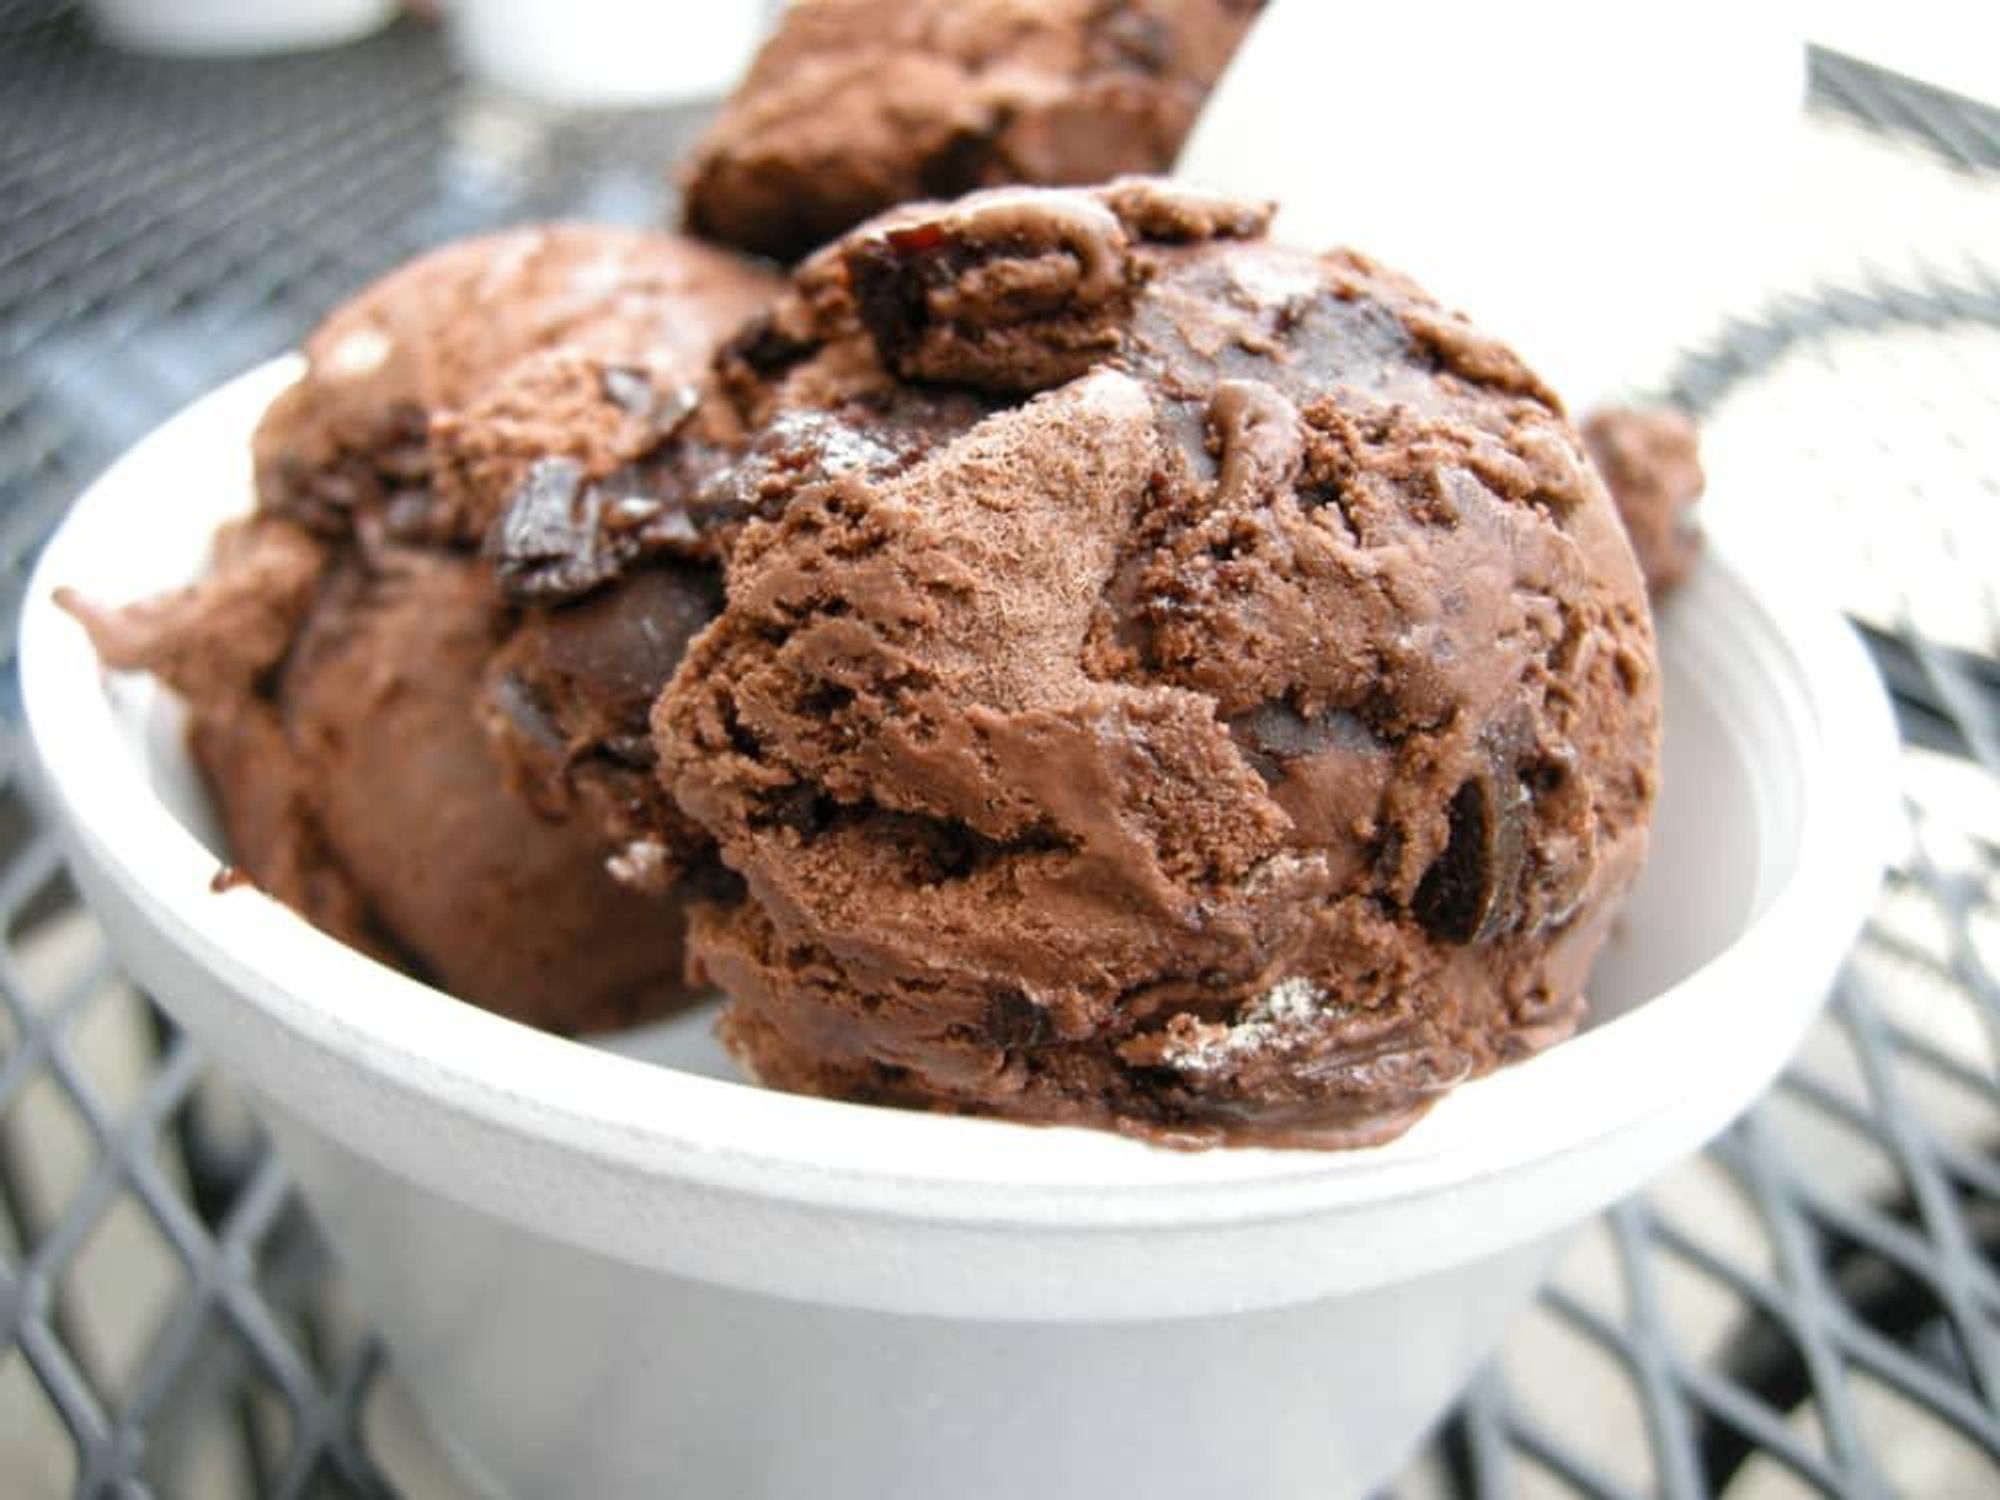 Chocolate ice cream generic